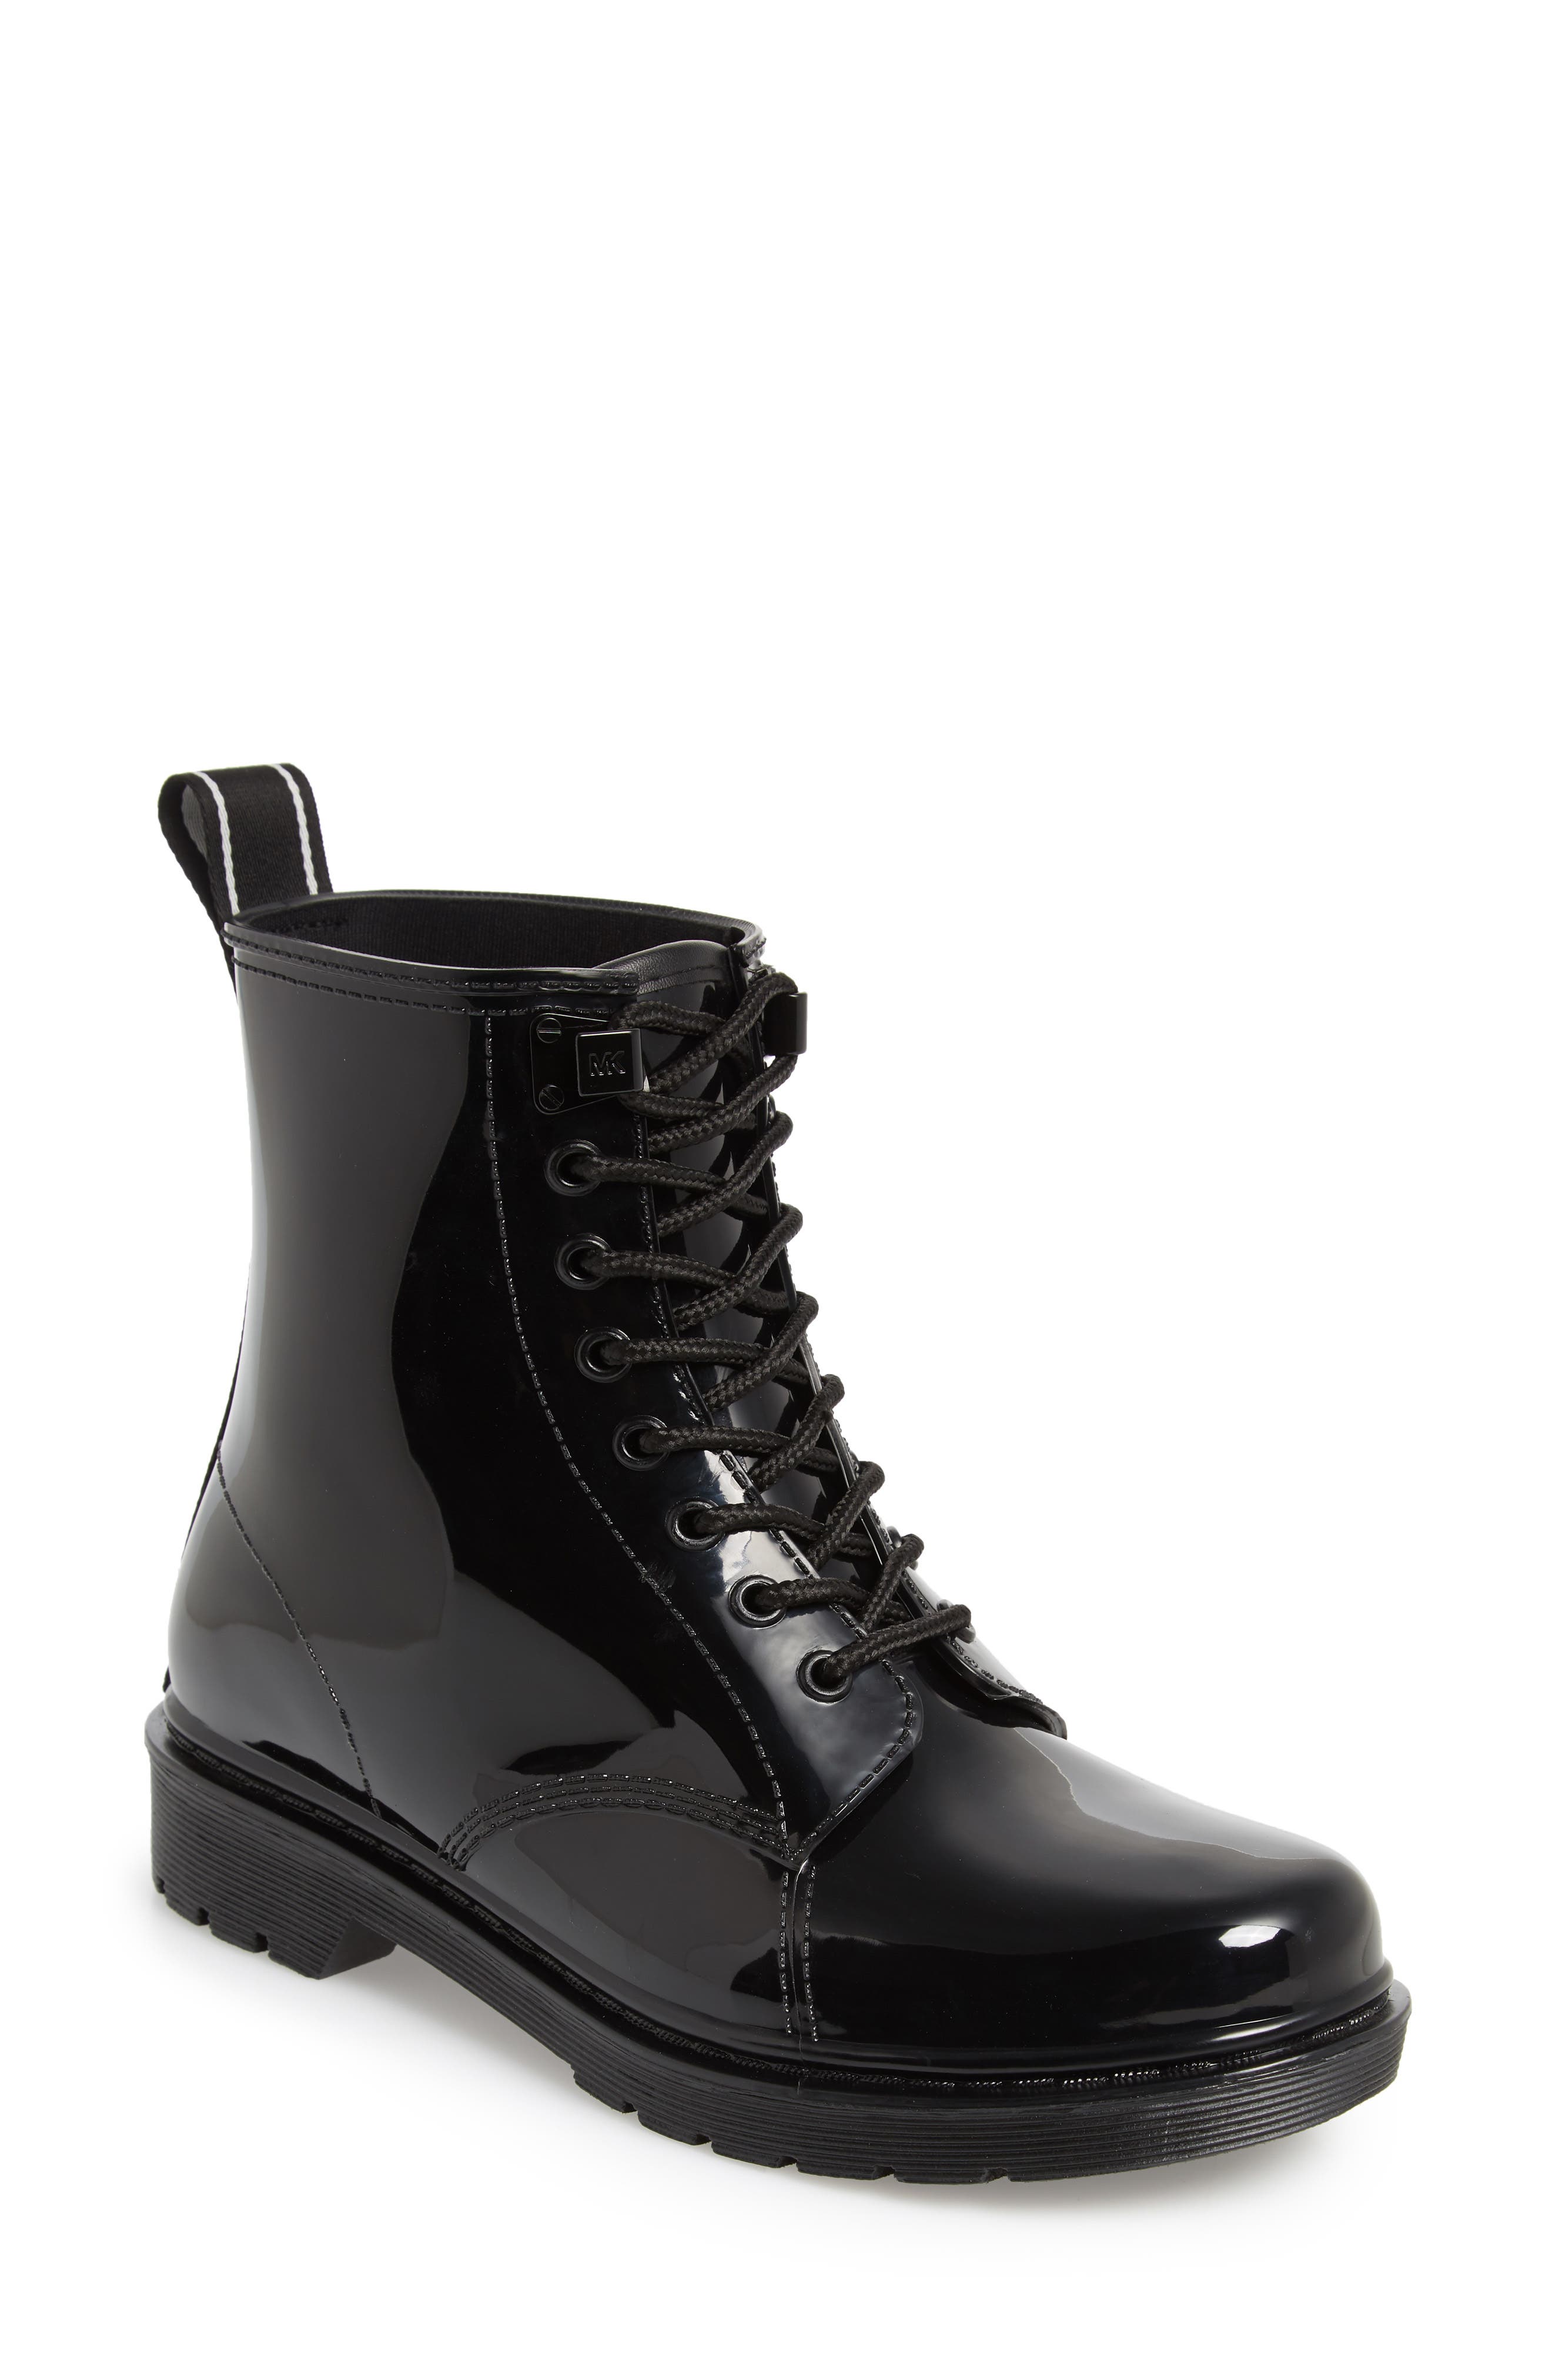 mk black rain boots